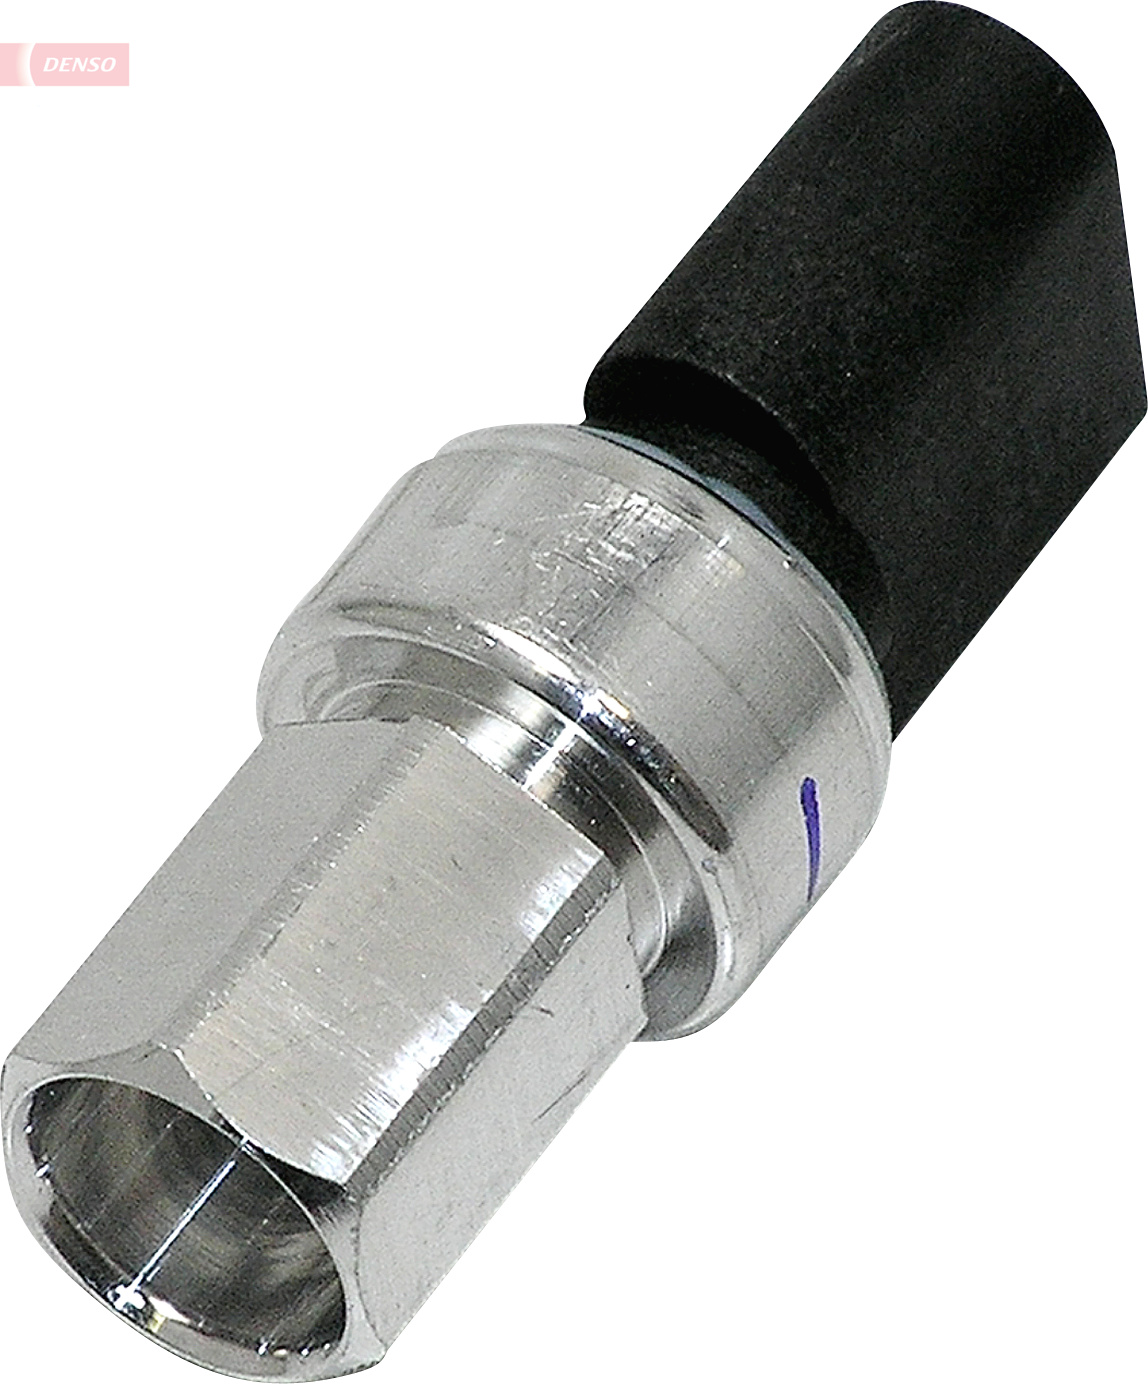 Denso Air Con Pressure Switch DPS32002 [PM951520]